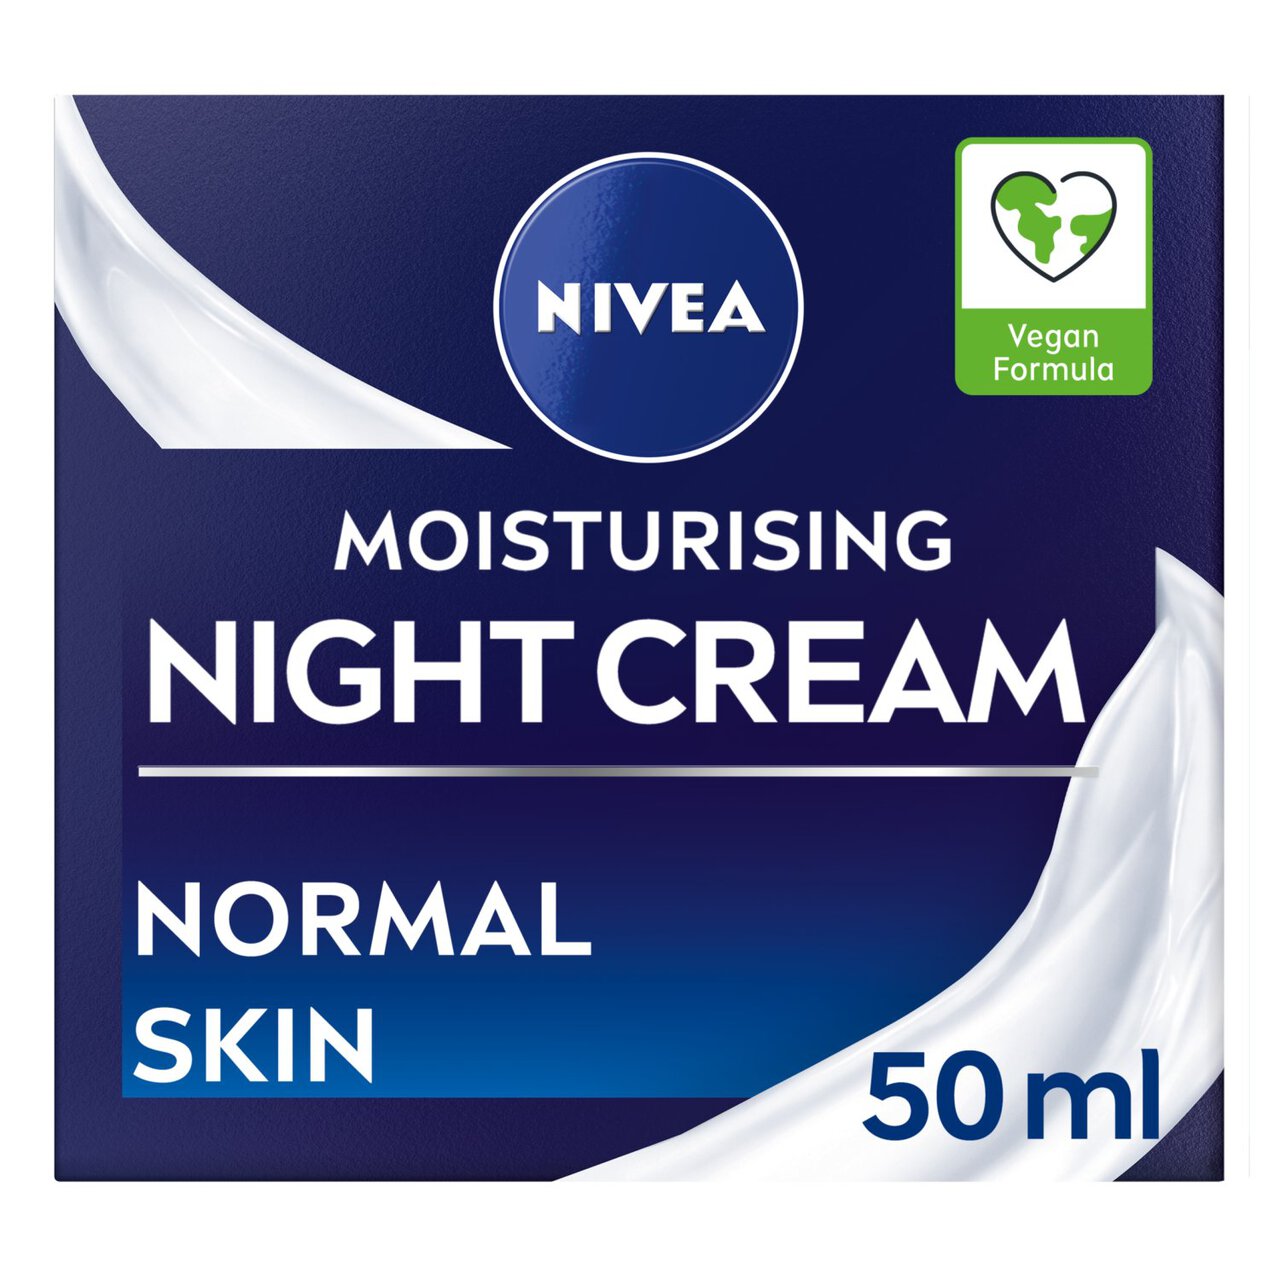 NIVEA Night Cream Face Moisturiser for Normal Skin 50ml